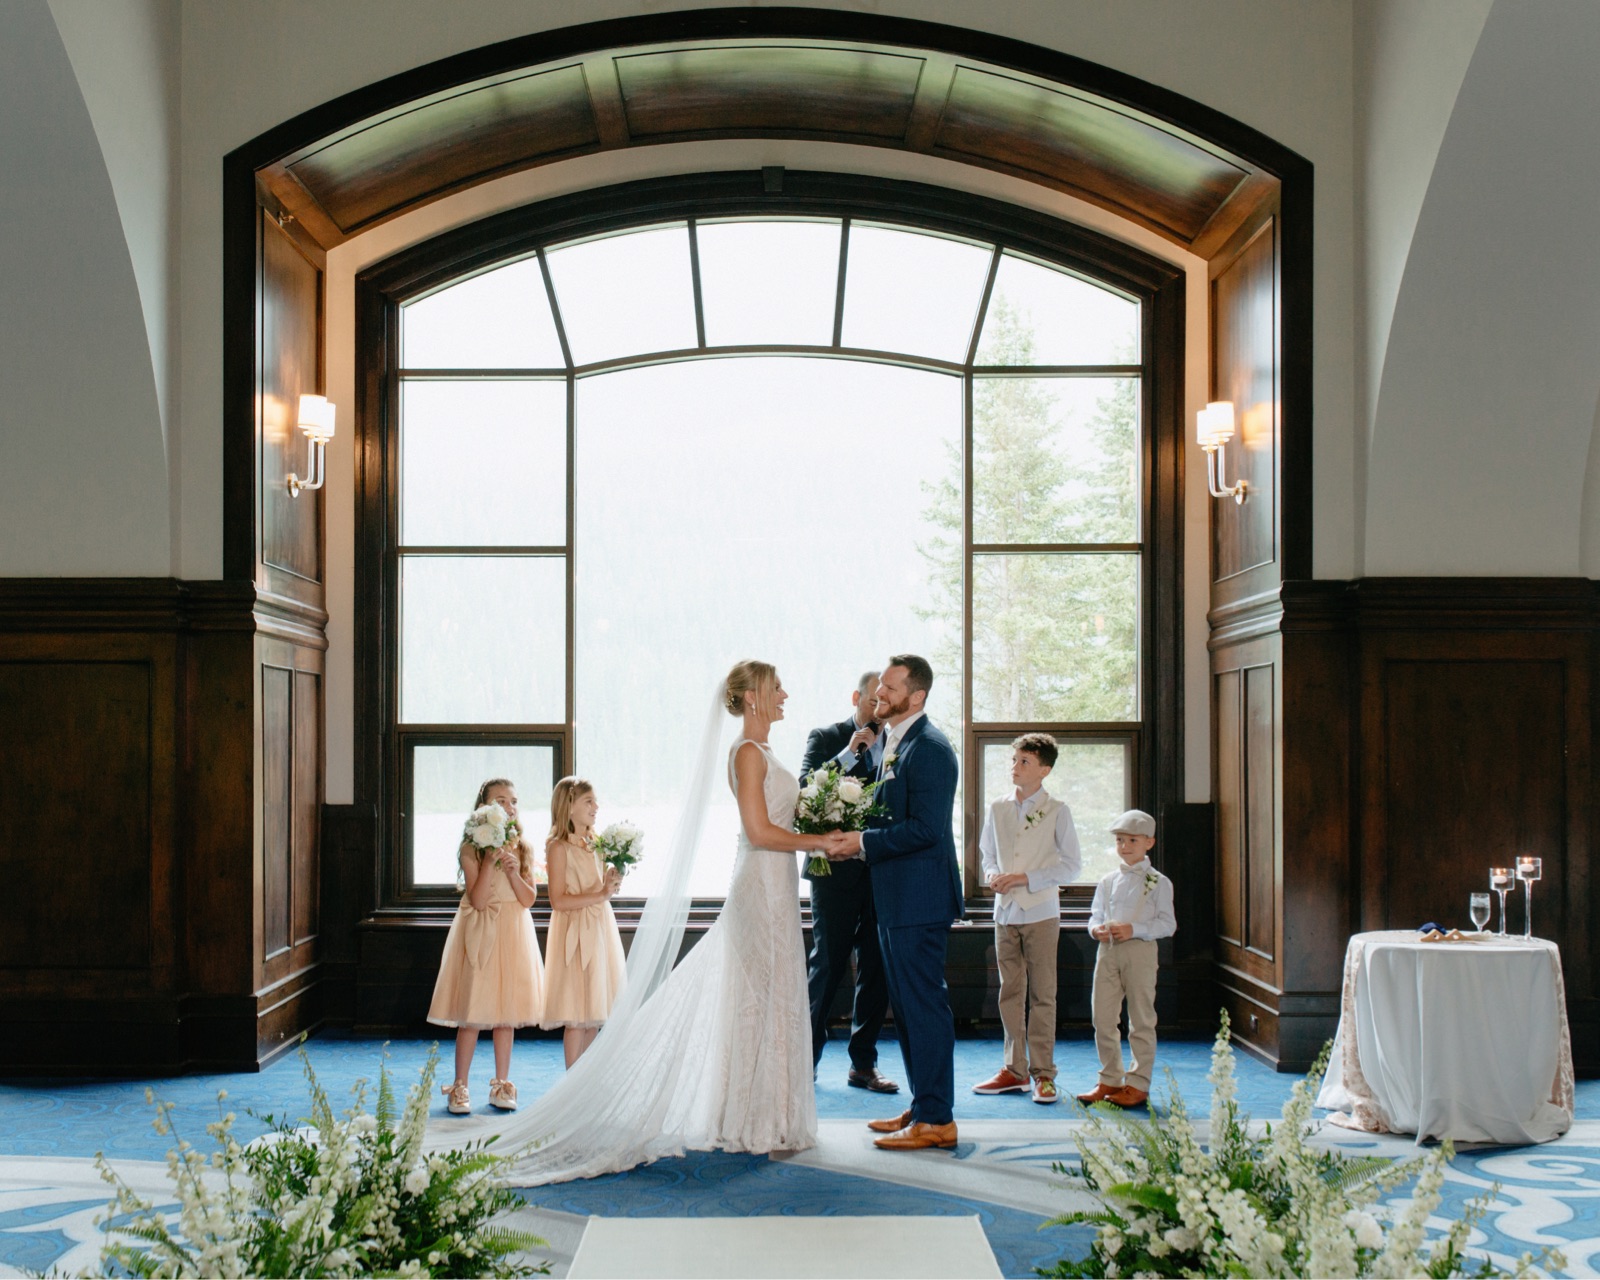 Indoor wedding ceremony in the Victoria Ballroom with window backdrop overlooking Lake Louise